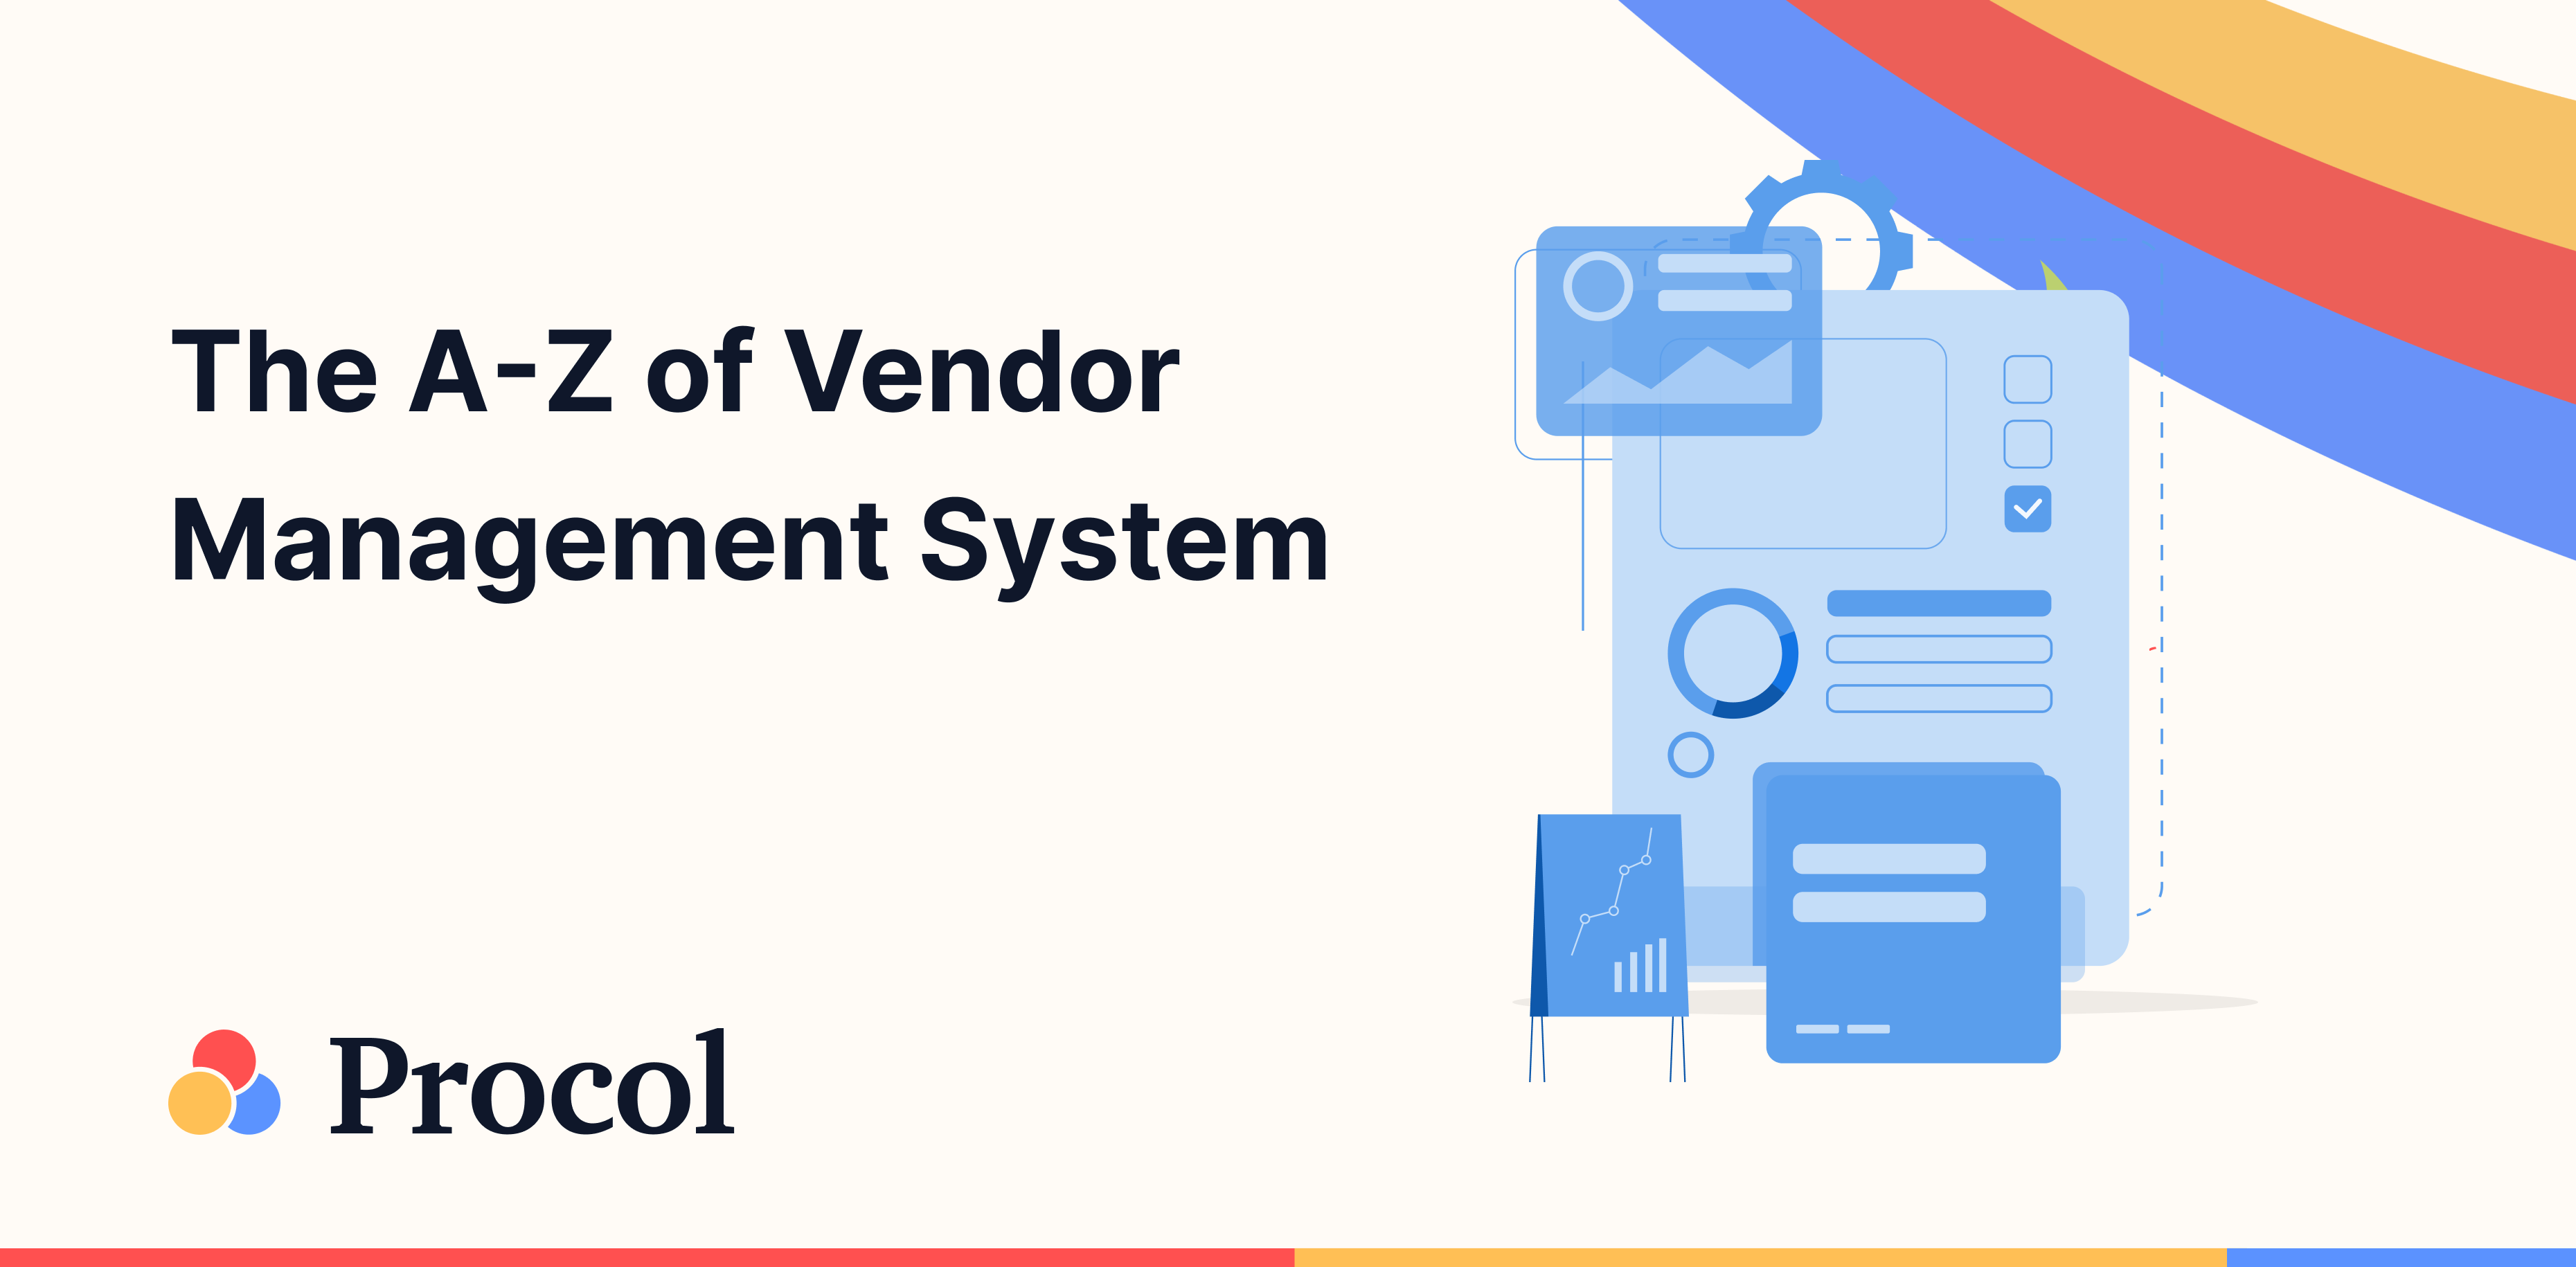 The A-Z of Vendor Management System